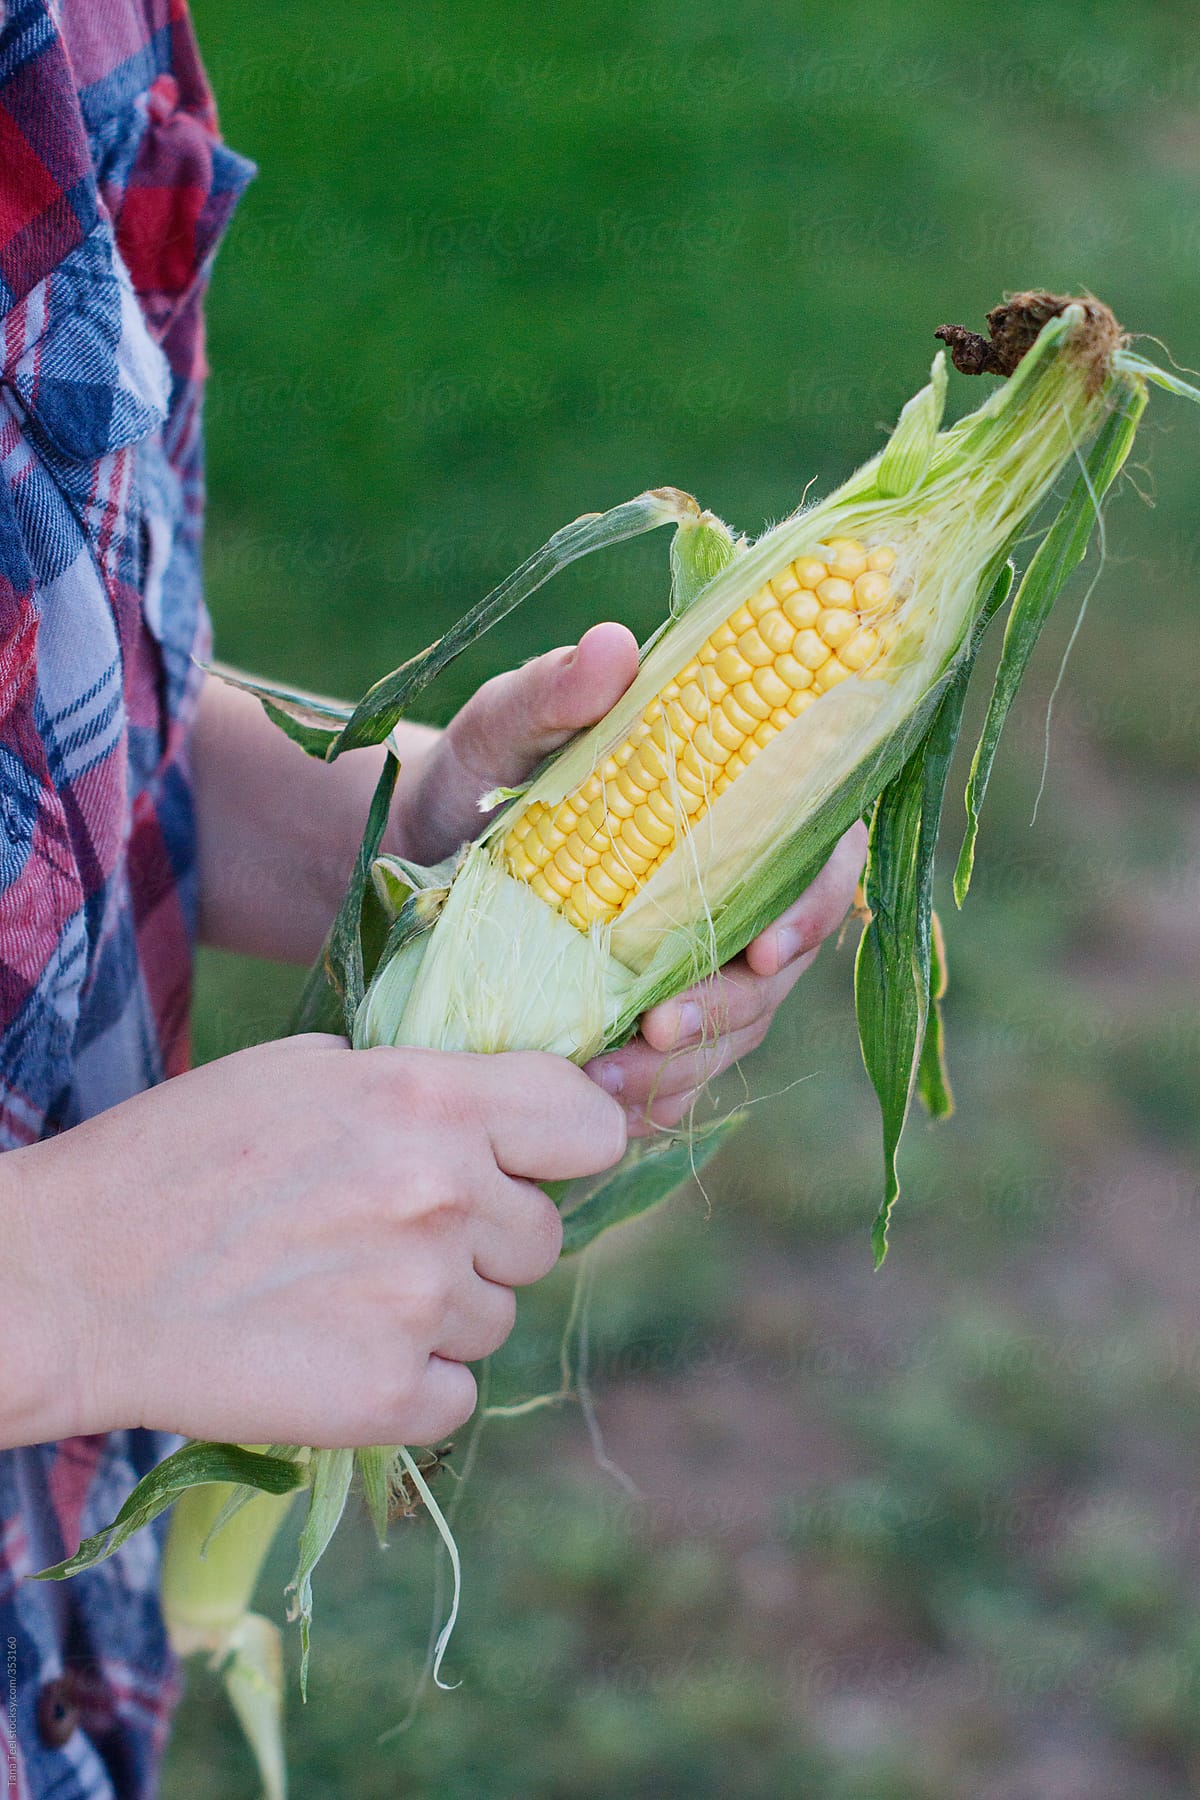 A husk pulled back to reveal corn kernels